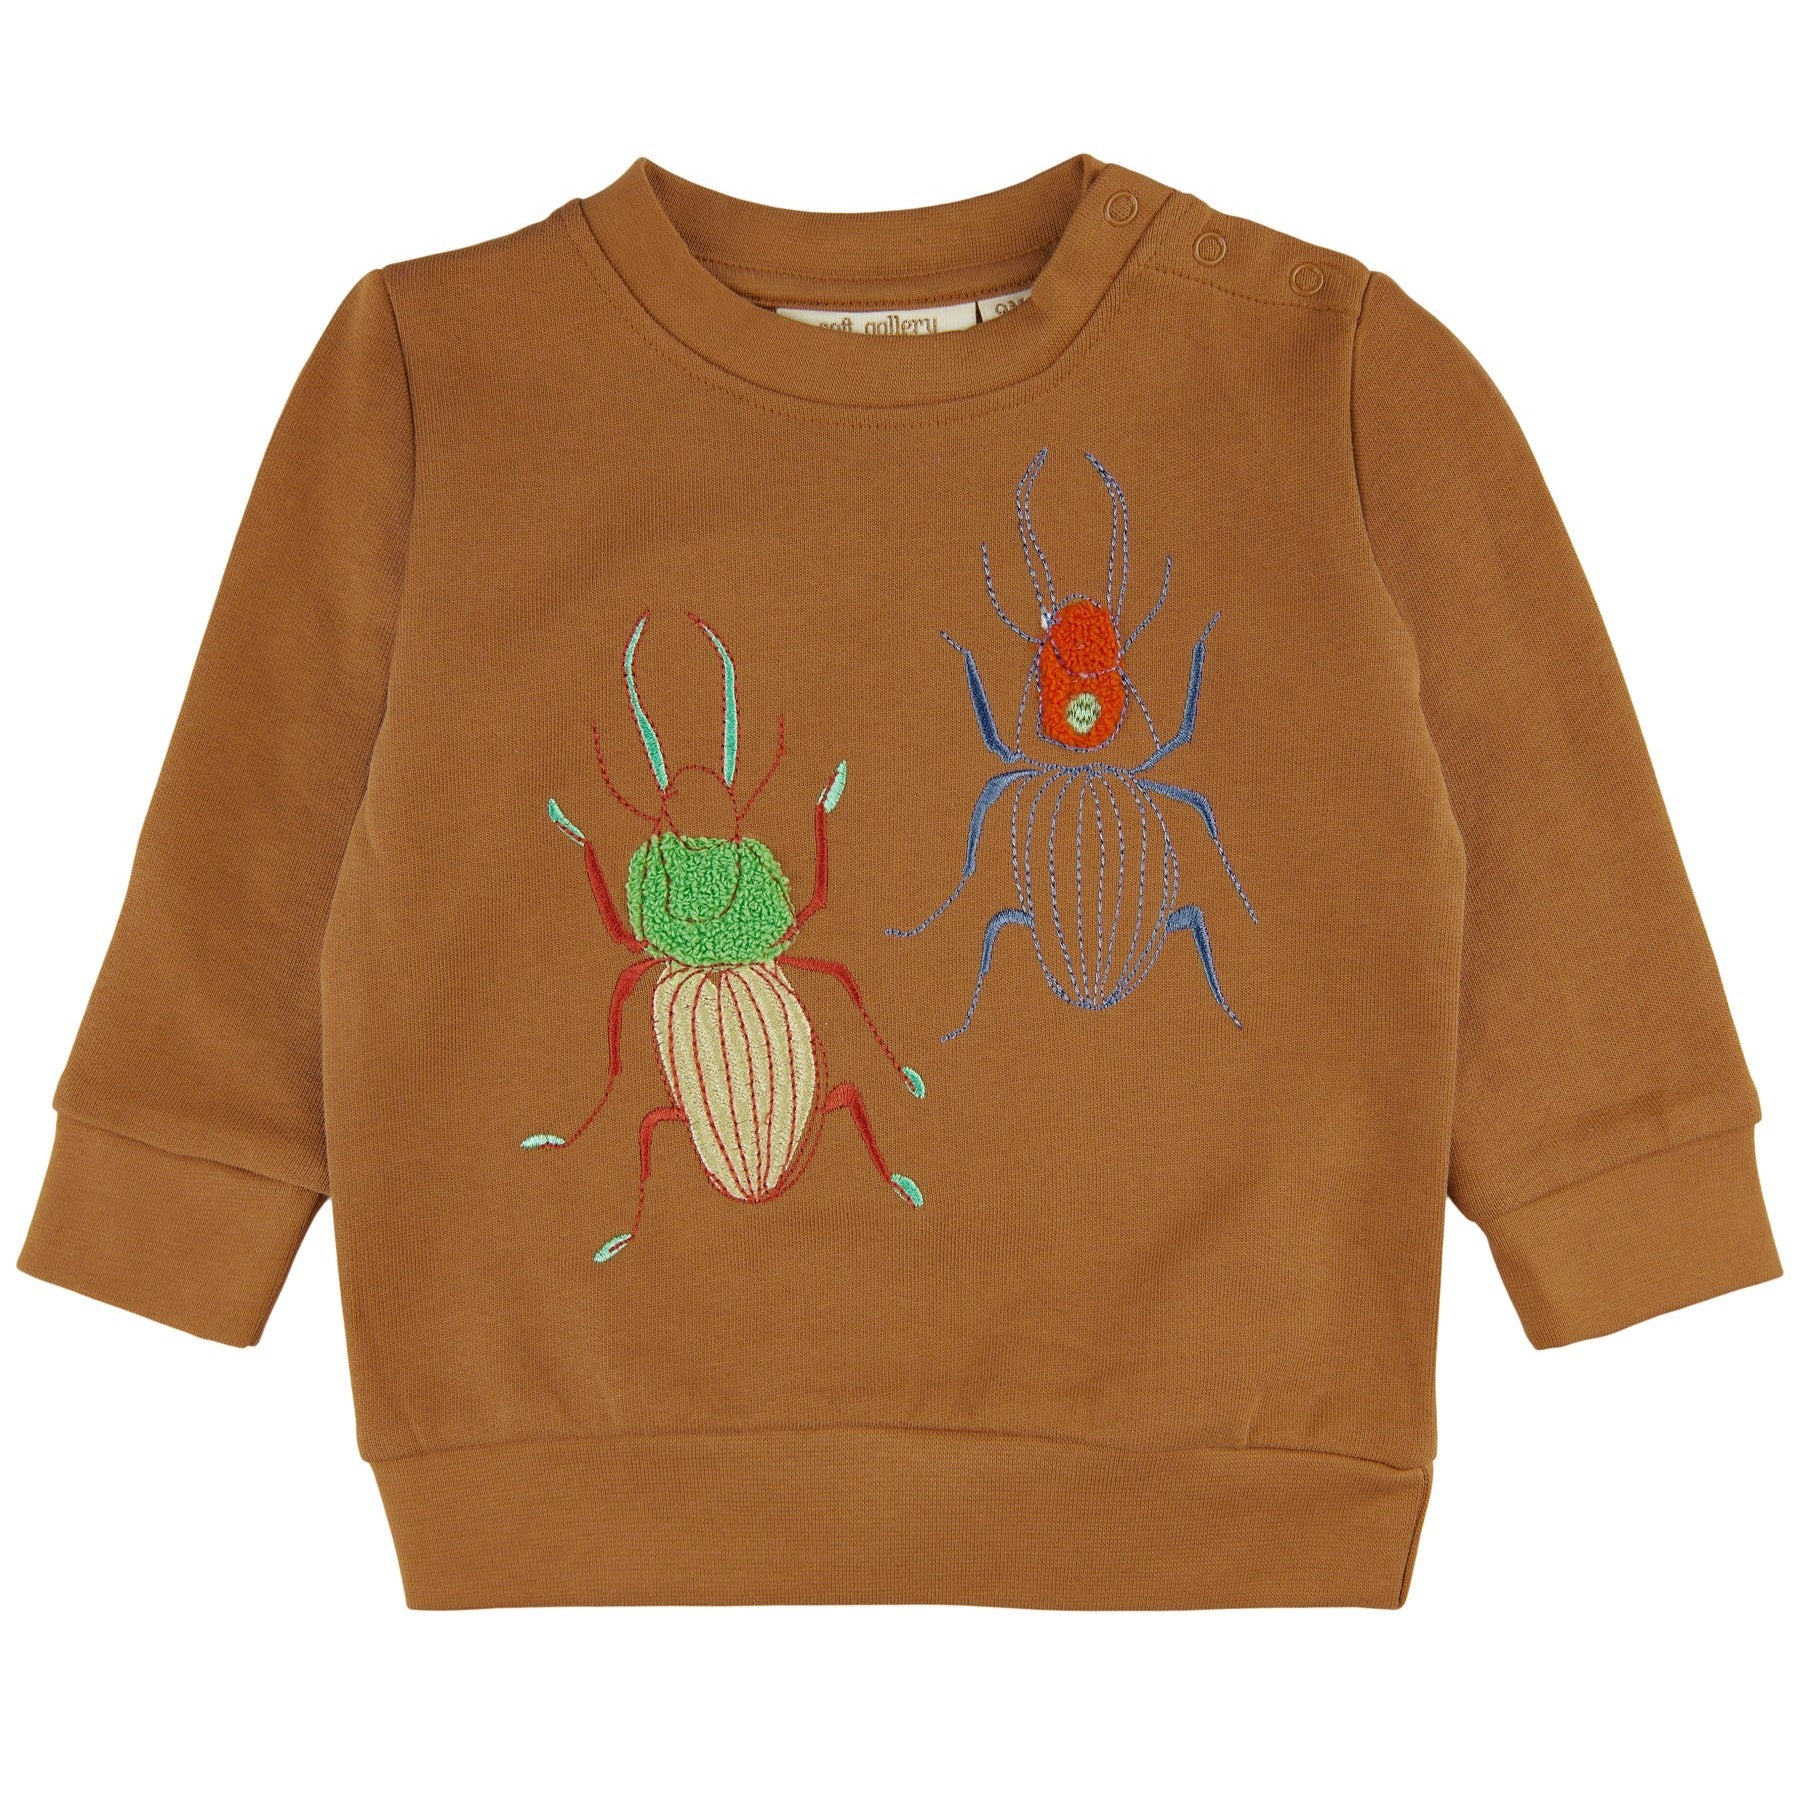 Soft Gallery - Buzz Emb Bugs Sweatshirt, SG1955 - Brown Sugar